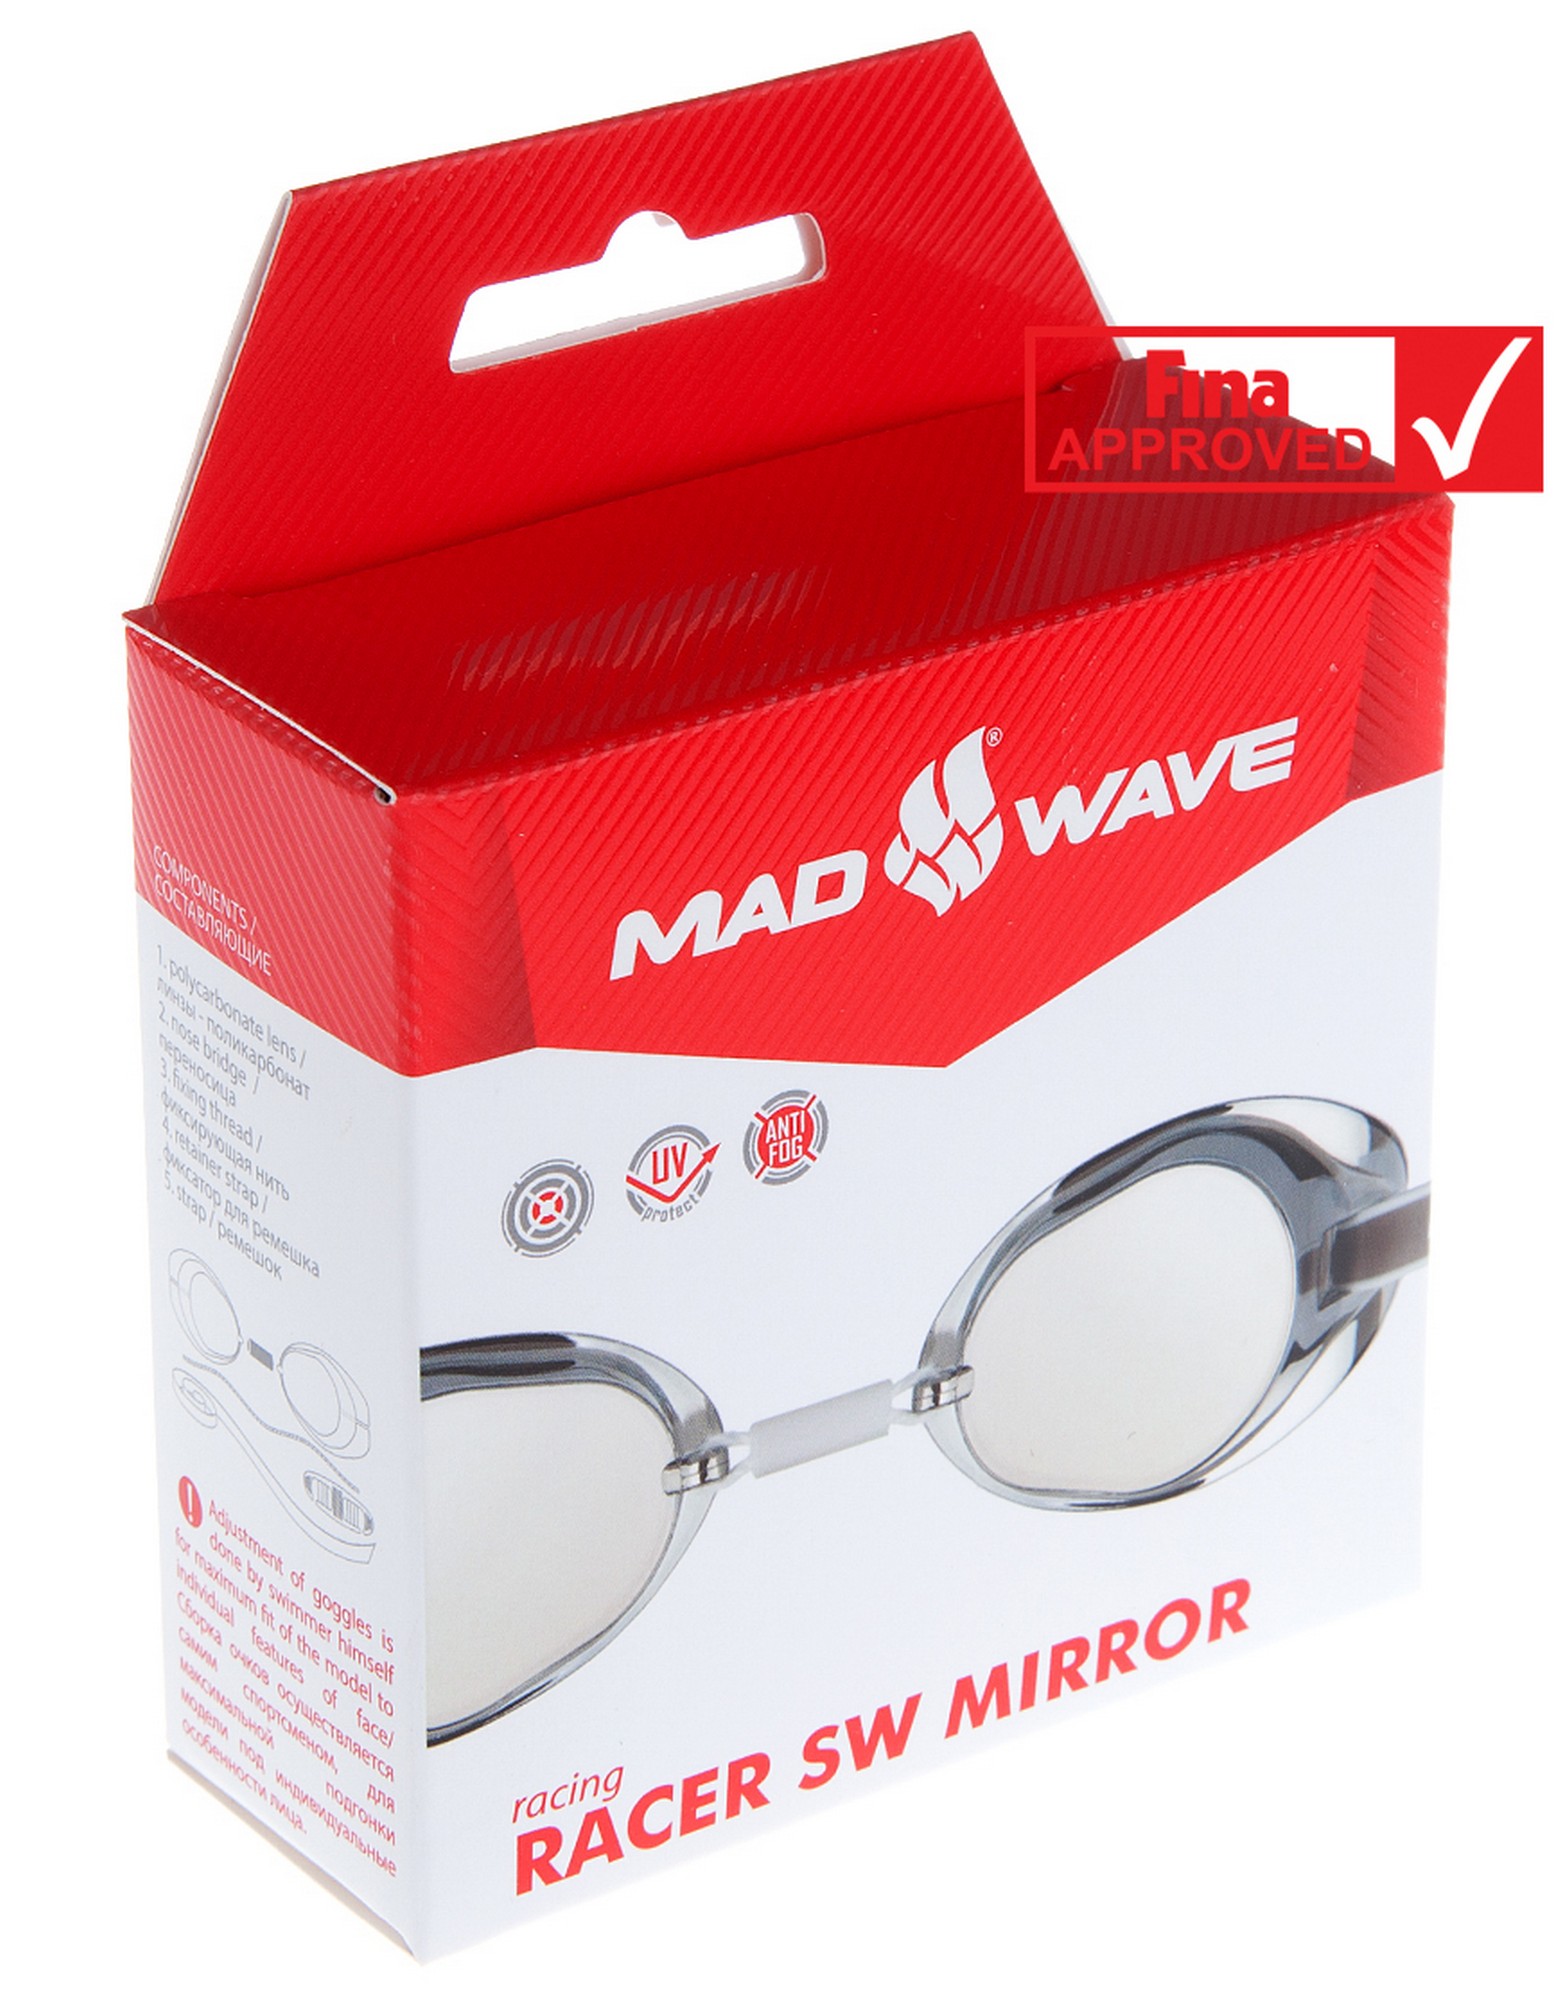 Стартовые очки Mad Wave Racer SW Mirror M0455 02 0 17W 1561_2000